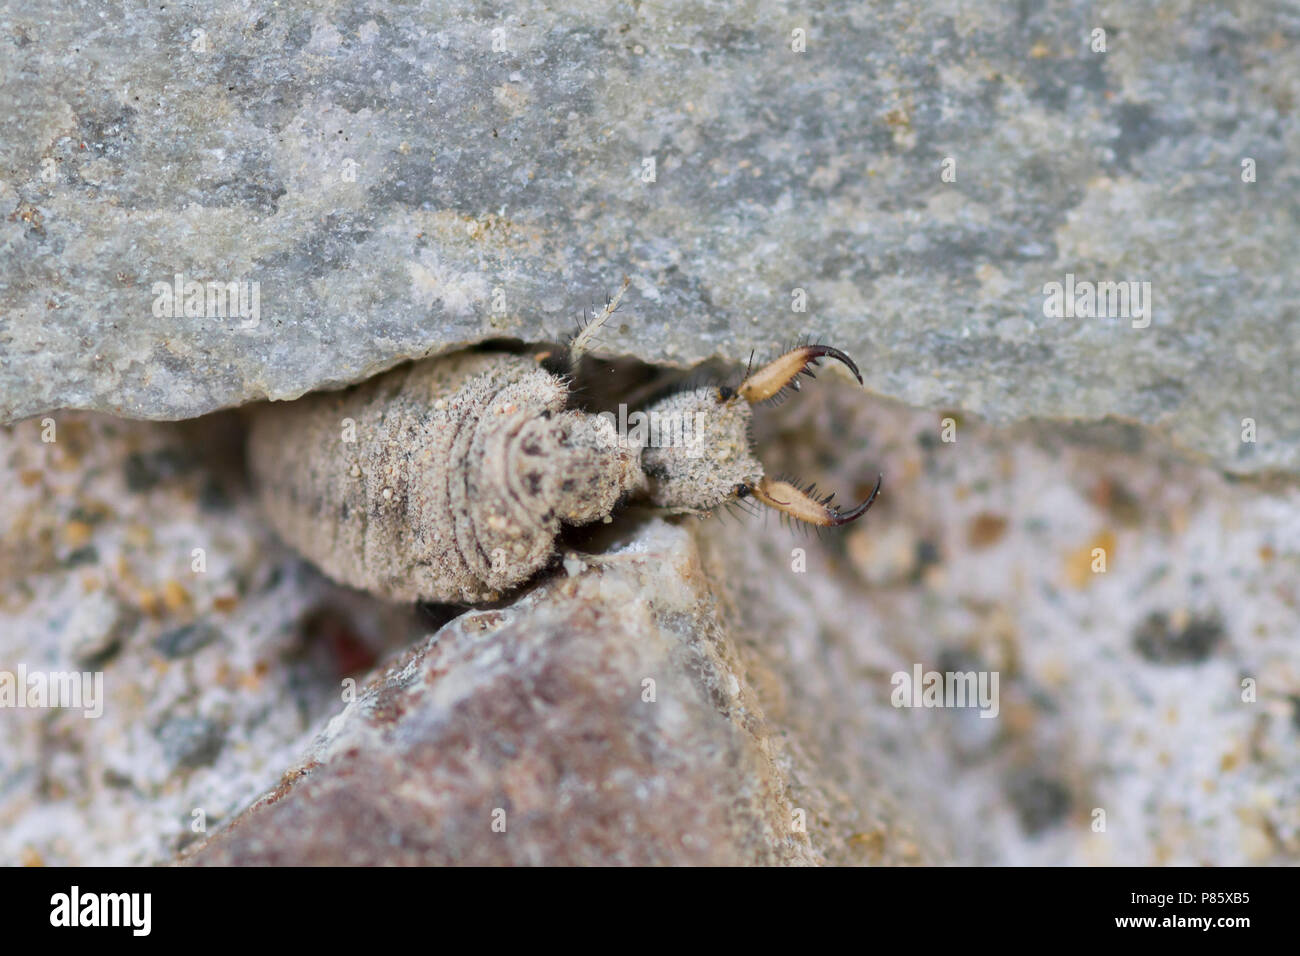 Antlion - Ameisenlöwe - Myrmeleontidae, Cyprus, larvae Stock Photo